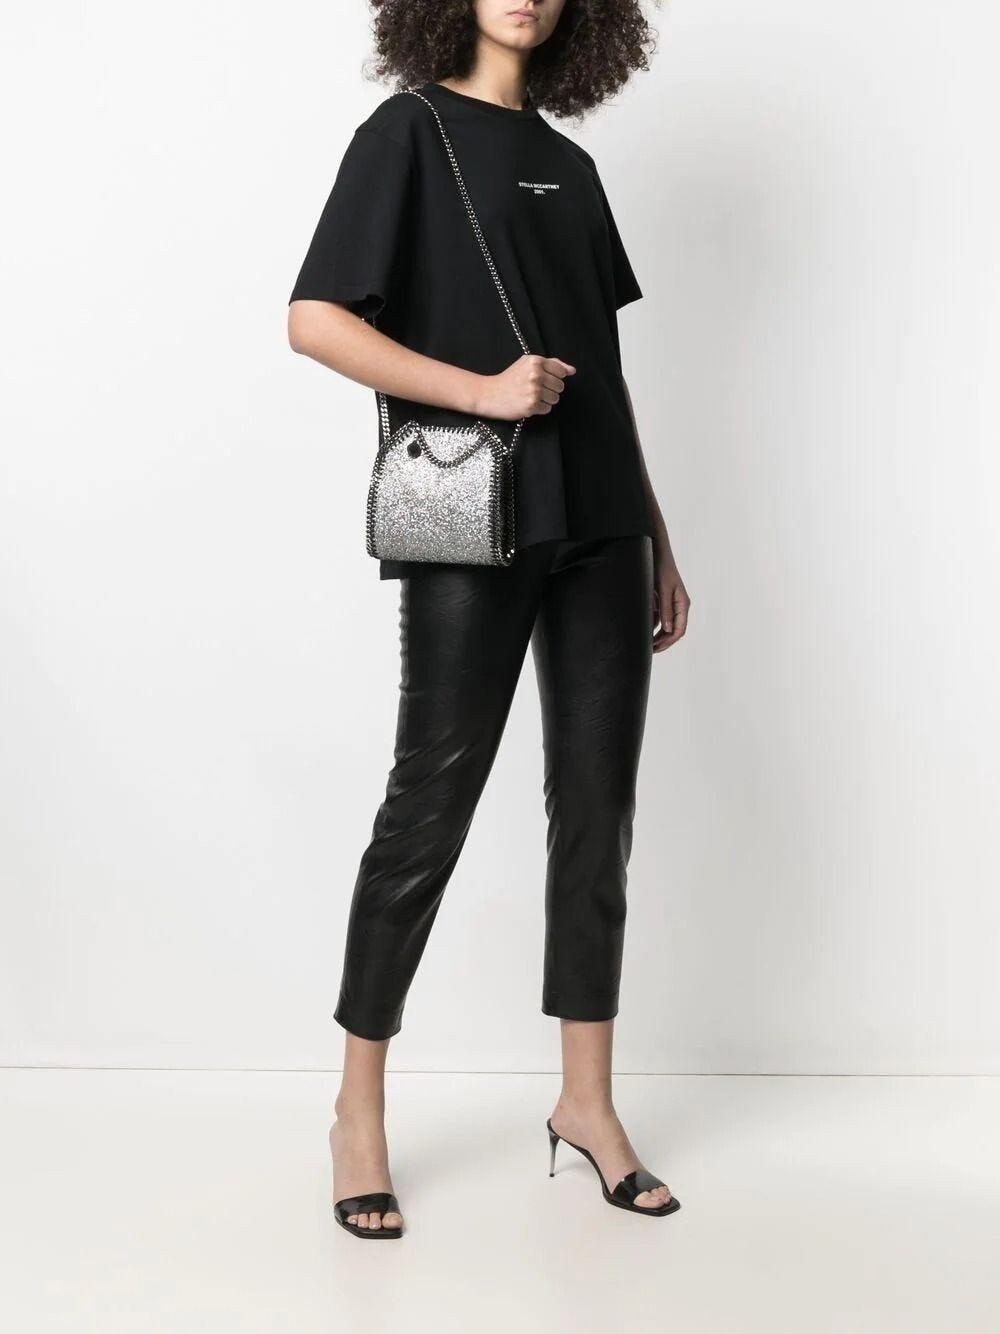 Women Black Falabella Mini Velvet and Crystal Chain Shoulder Bag